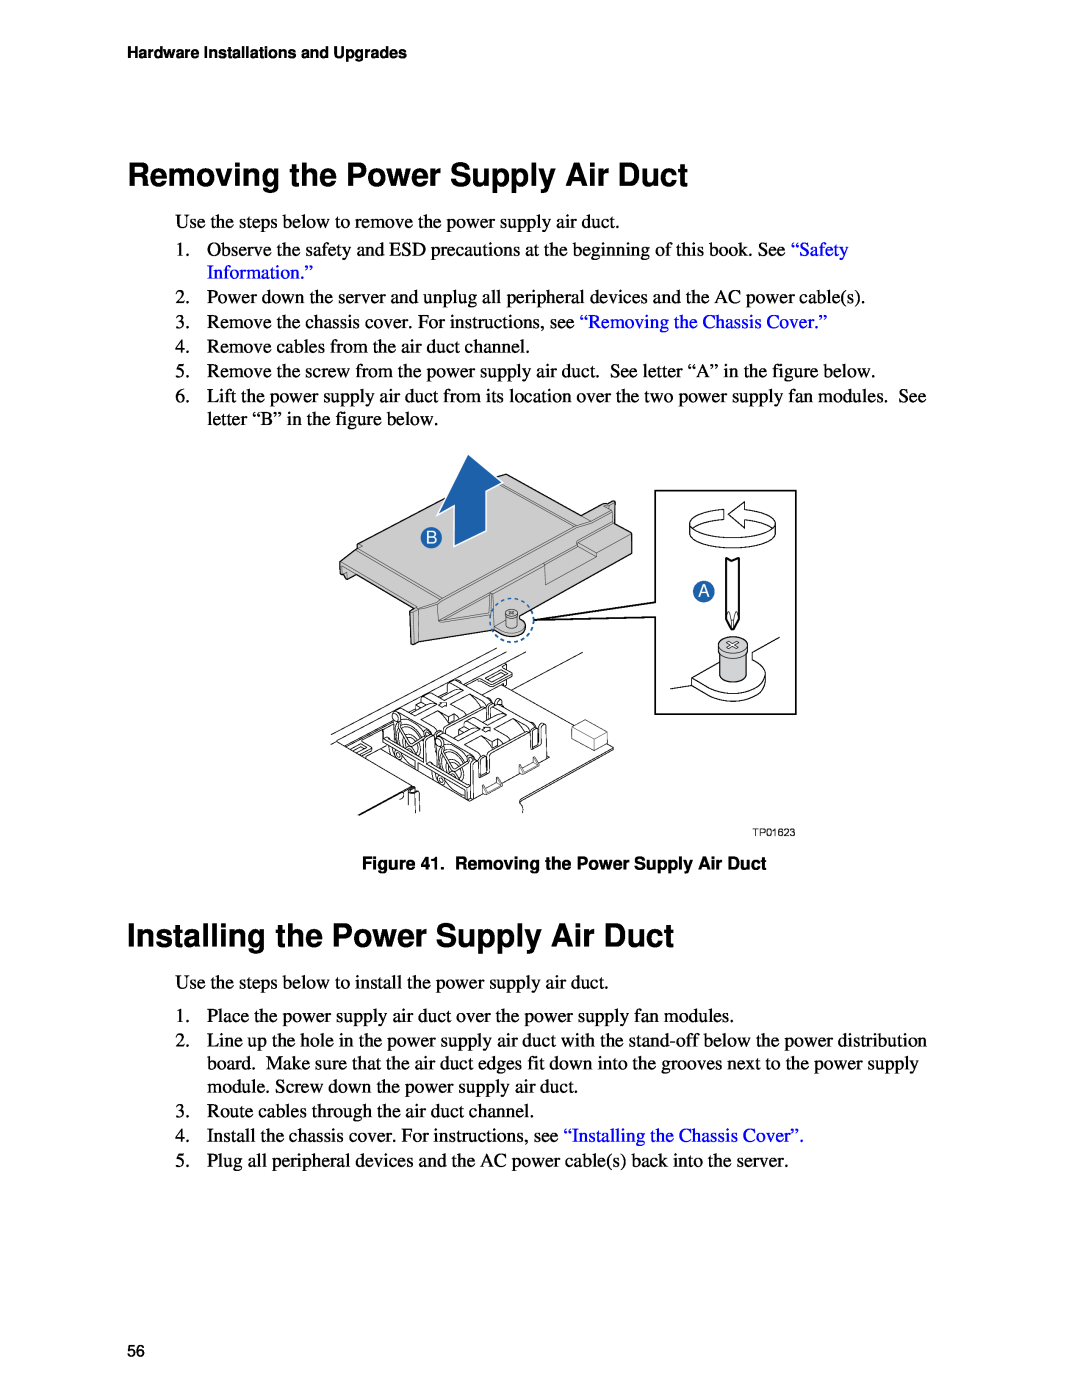 Intel SR1450 manual Removing the Power Supply Air Duct, Installing the Power Supply Air Duct 